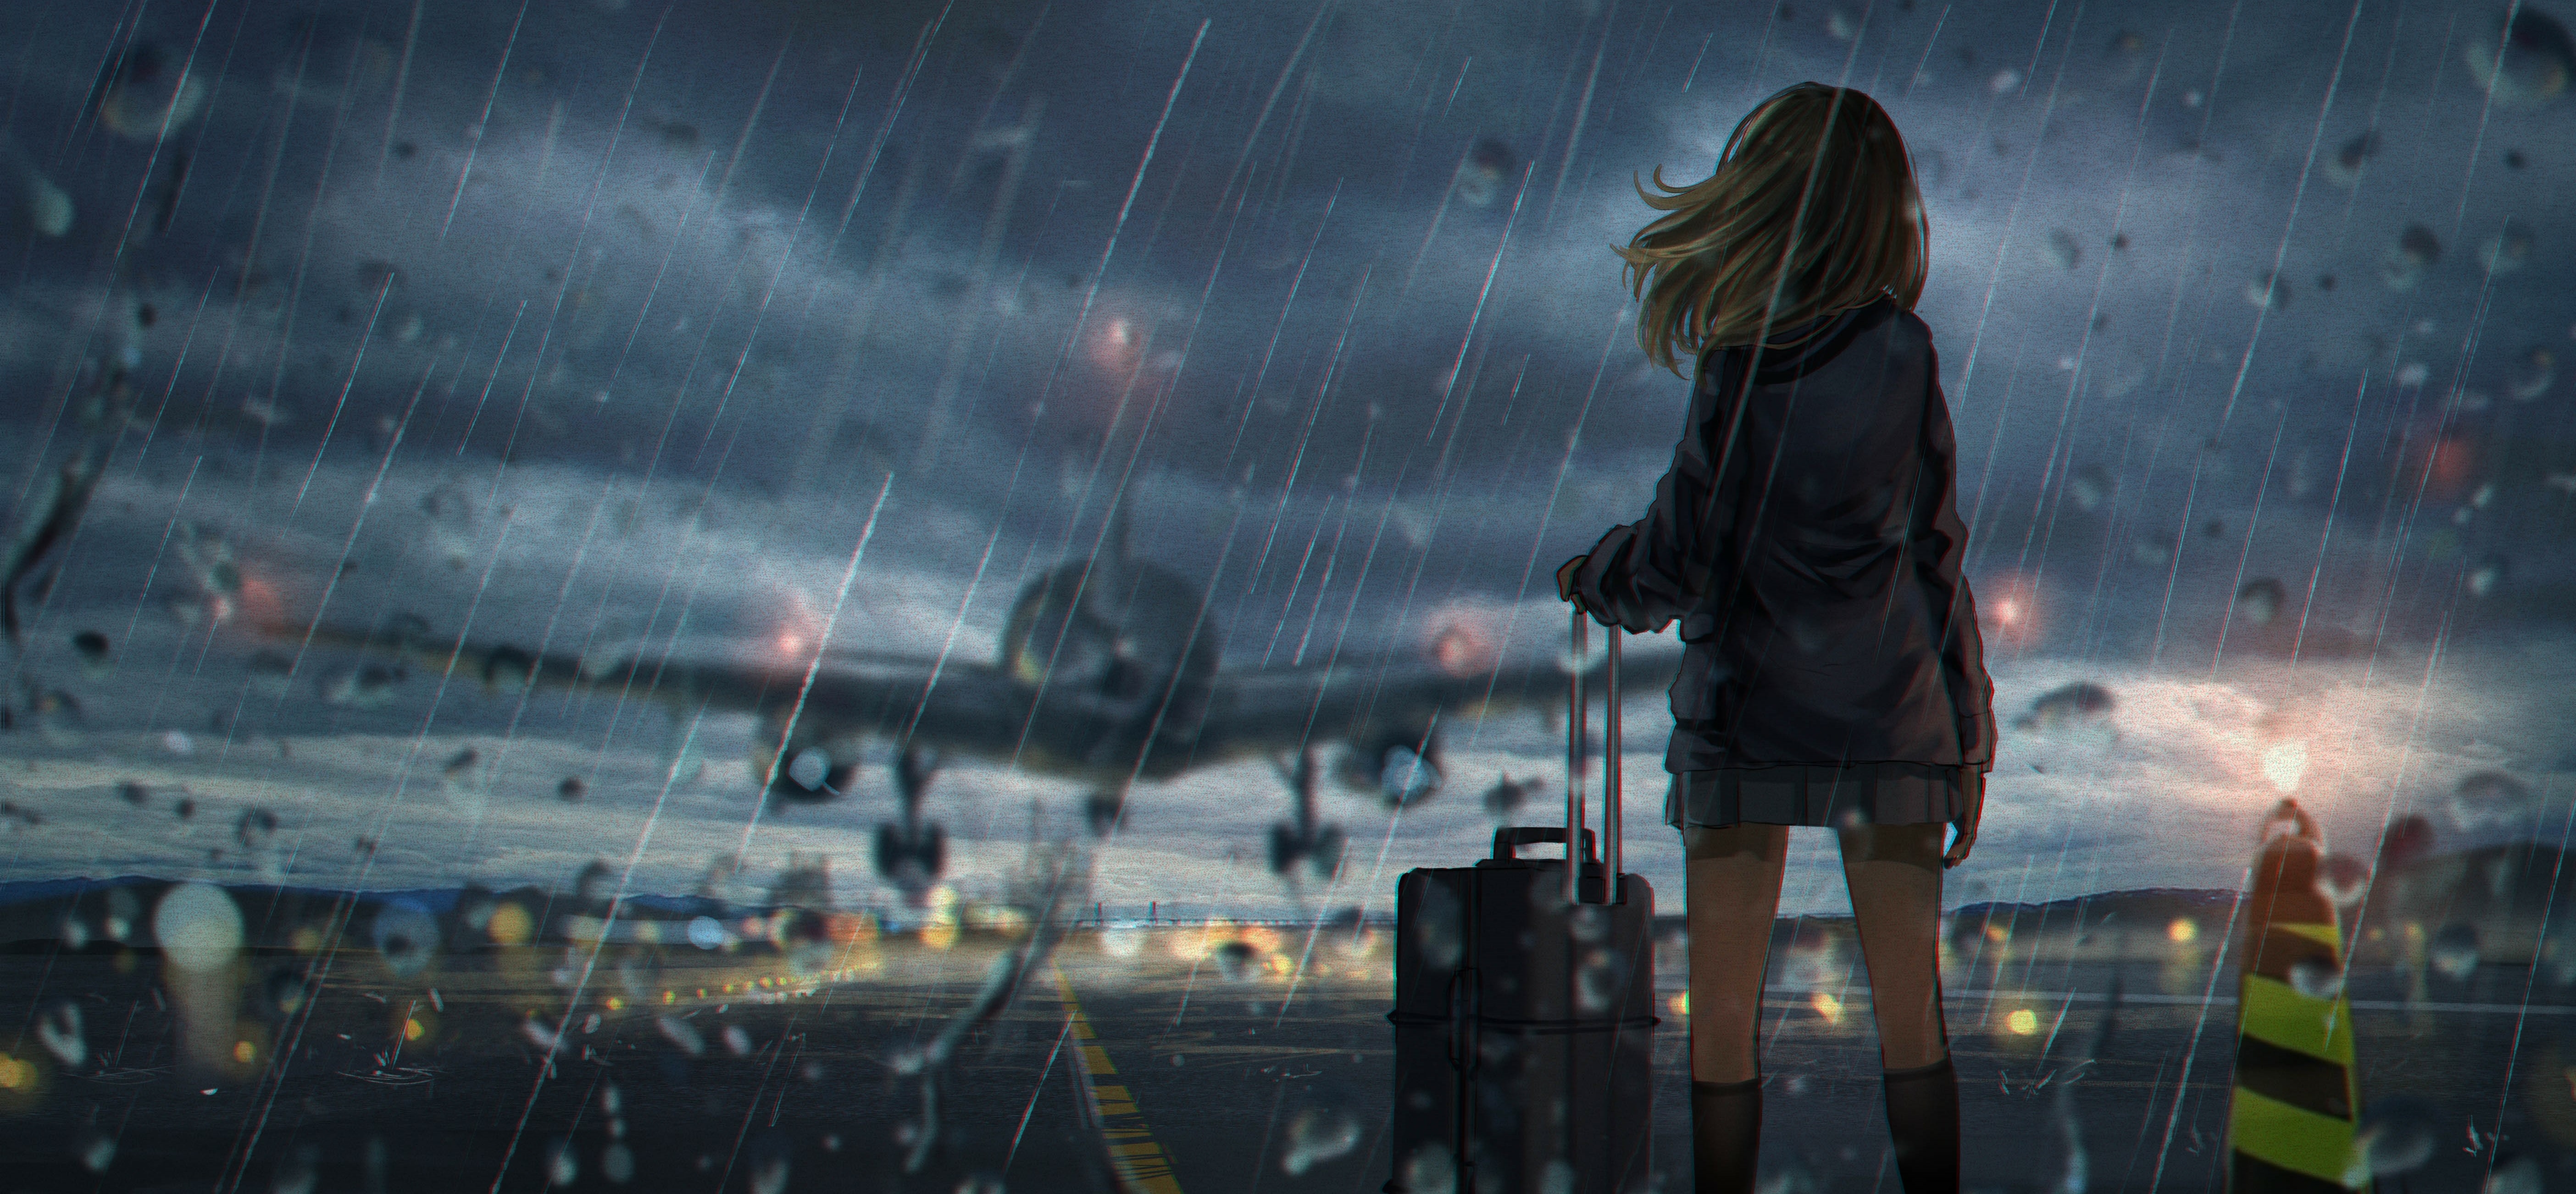 Alone in Airport 4K Rain Wallpaper, HD